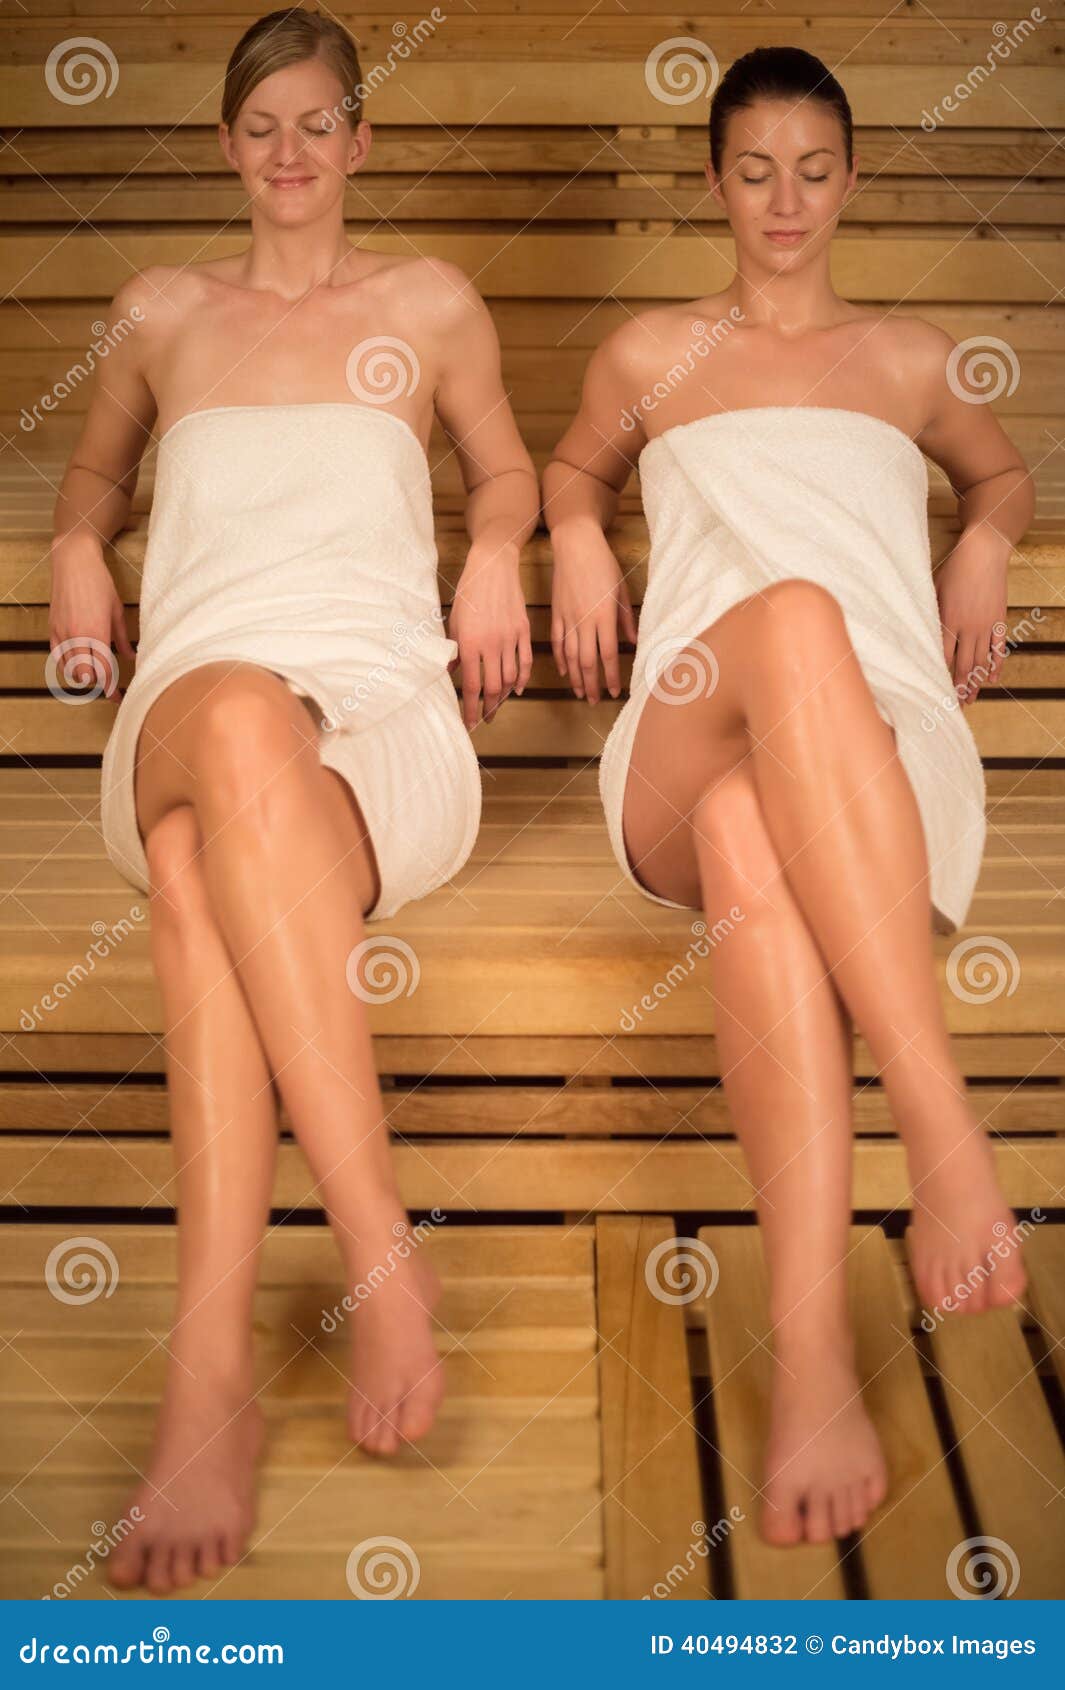 Two Naked Frauen Together